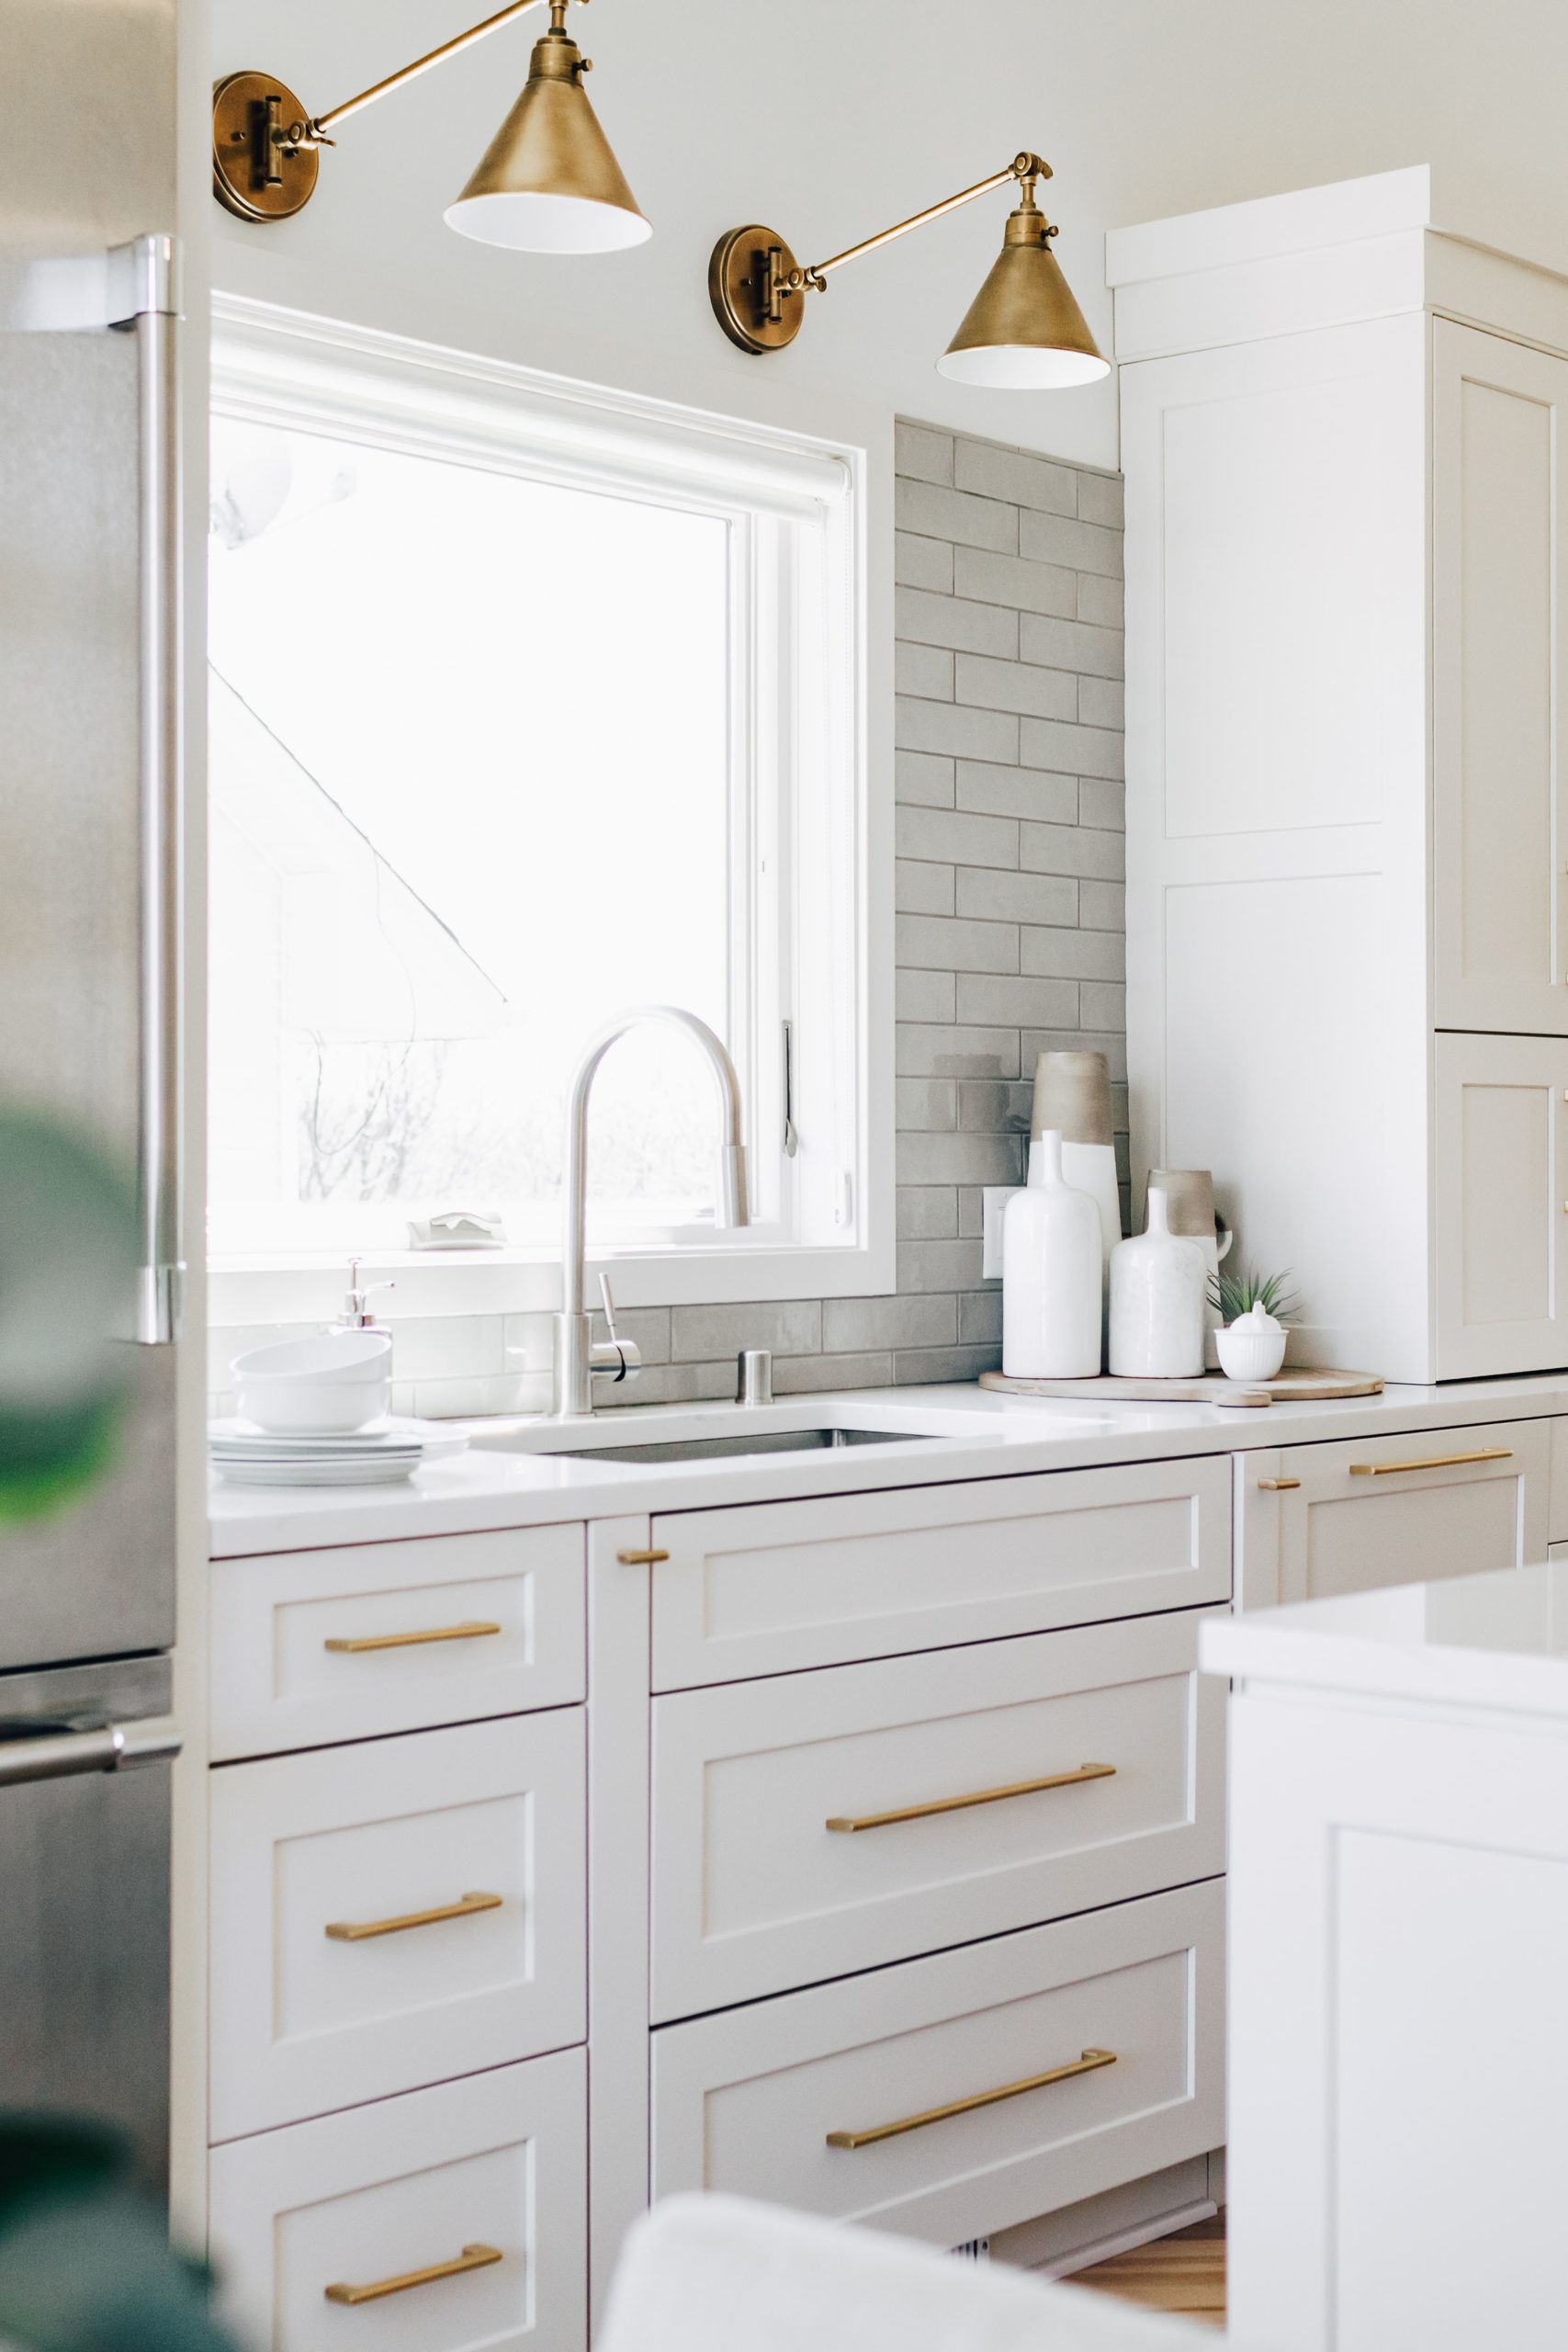 Custom Cabinetry Design White Kitchen with Full Wall Subway Tile Backsplash